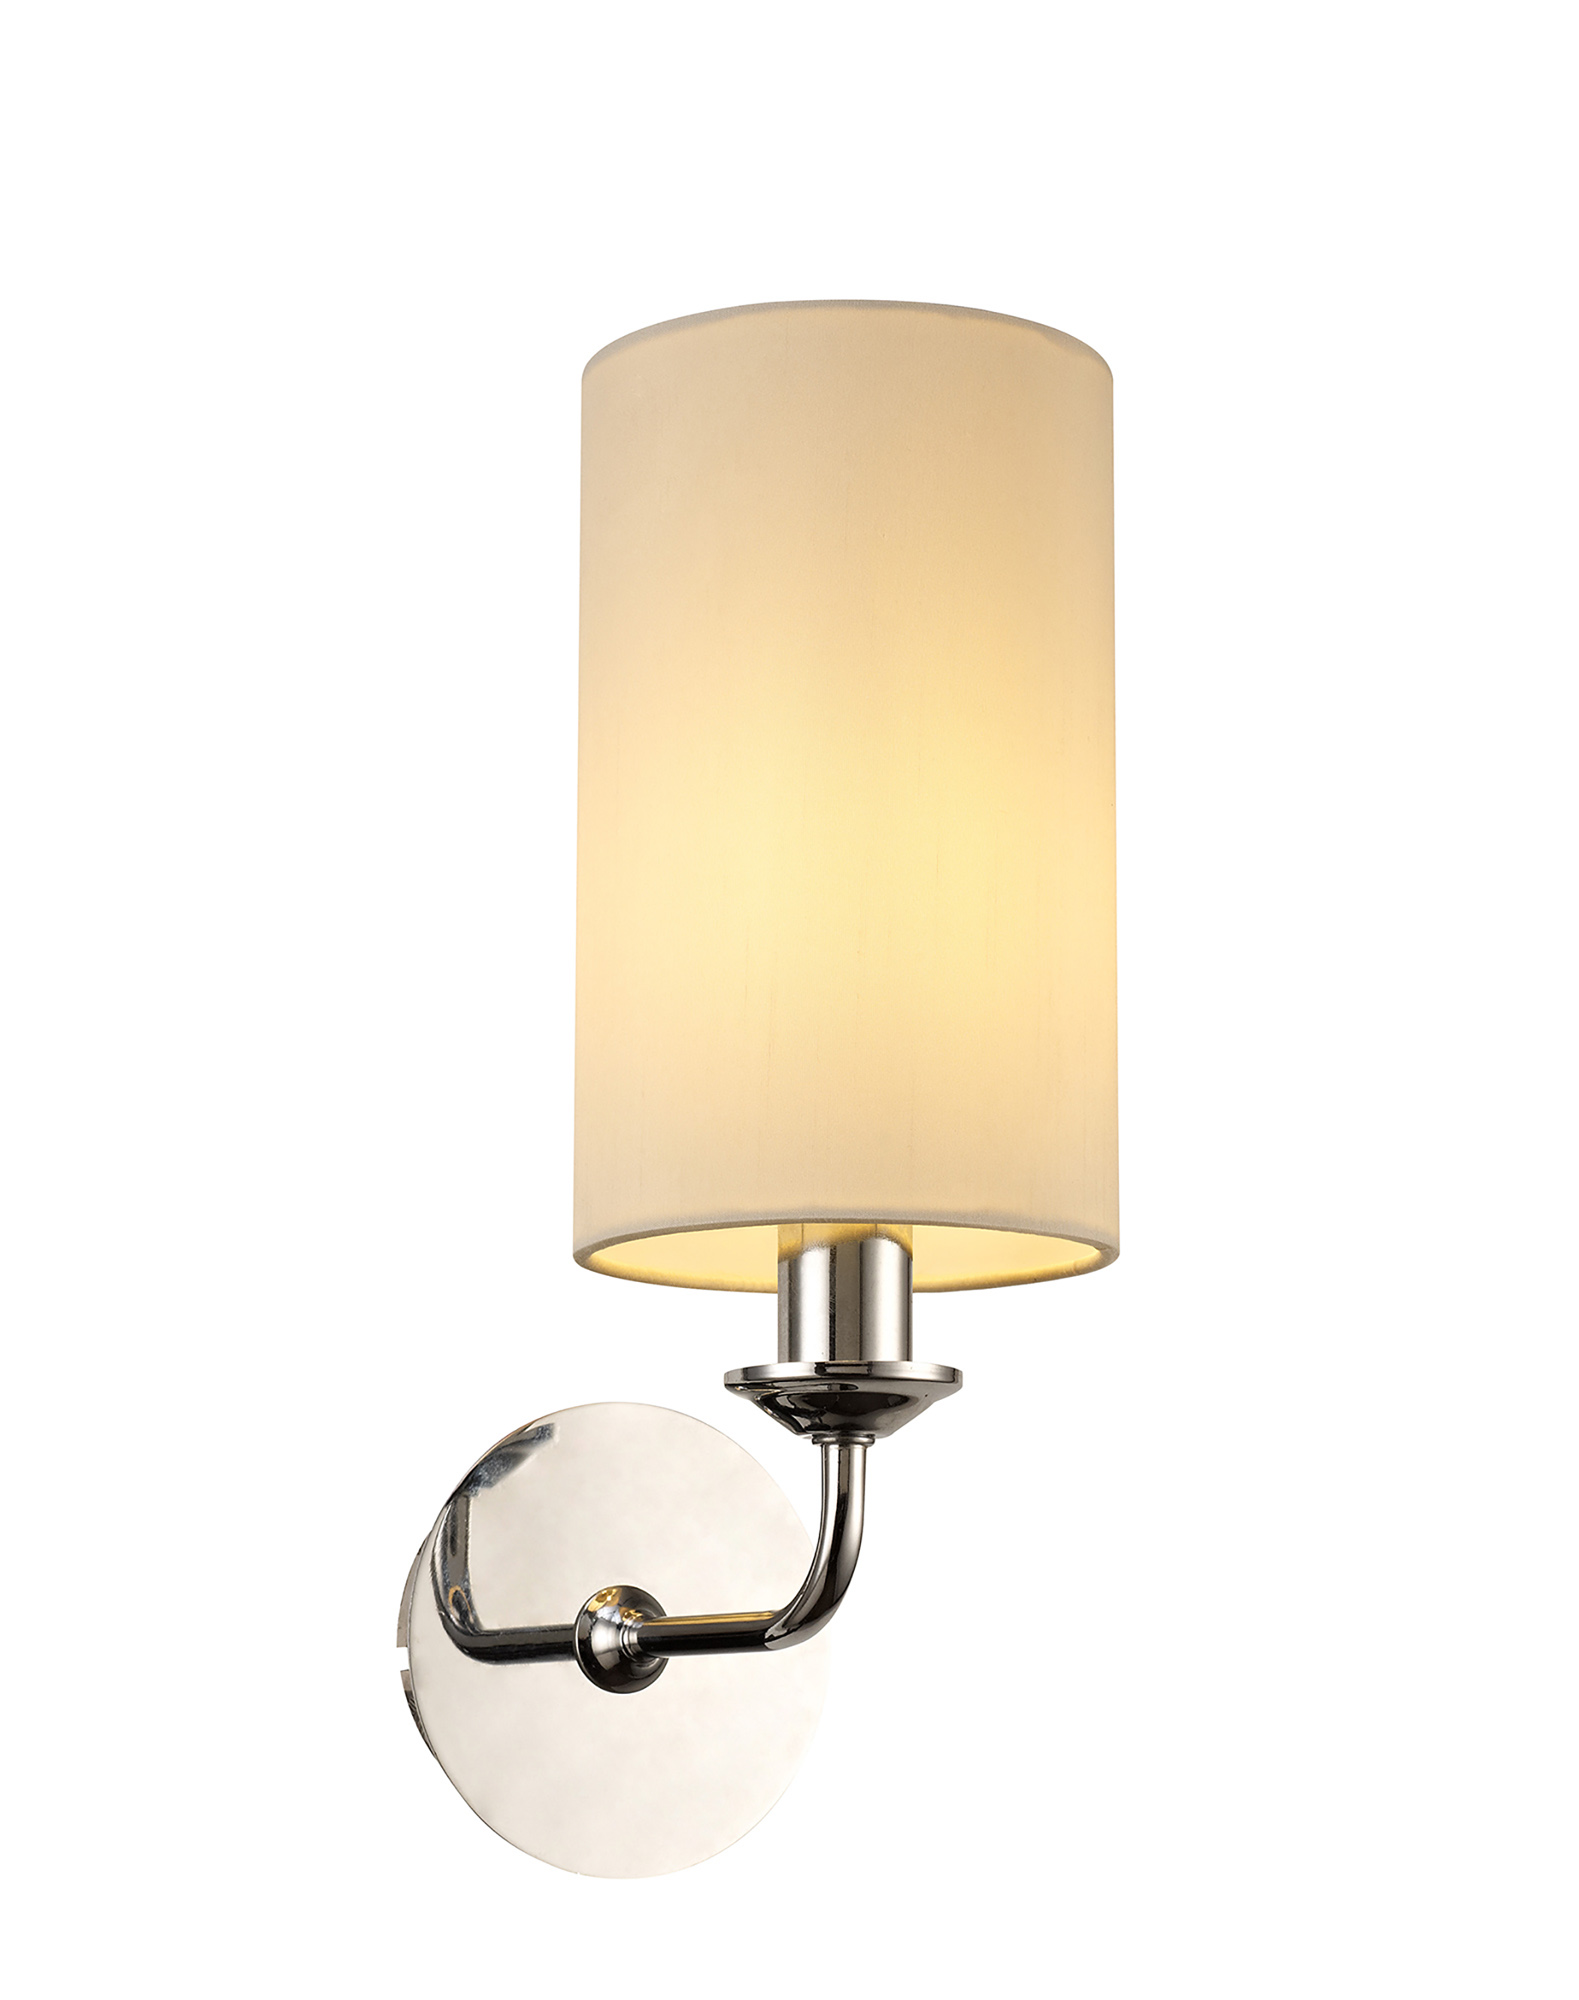 DK0012  Banyan Wall Lamp 1 Light Polished Chrome; Ivory Pearl